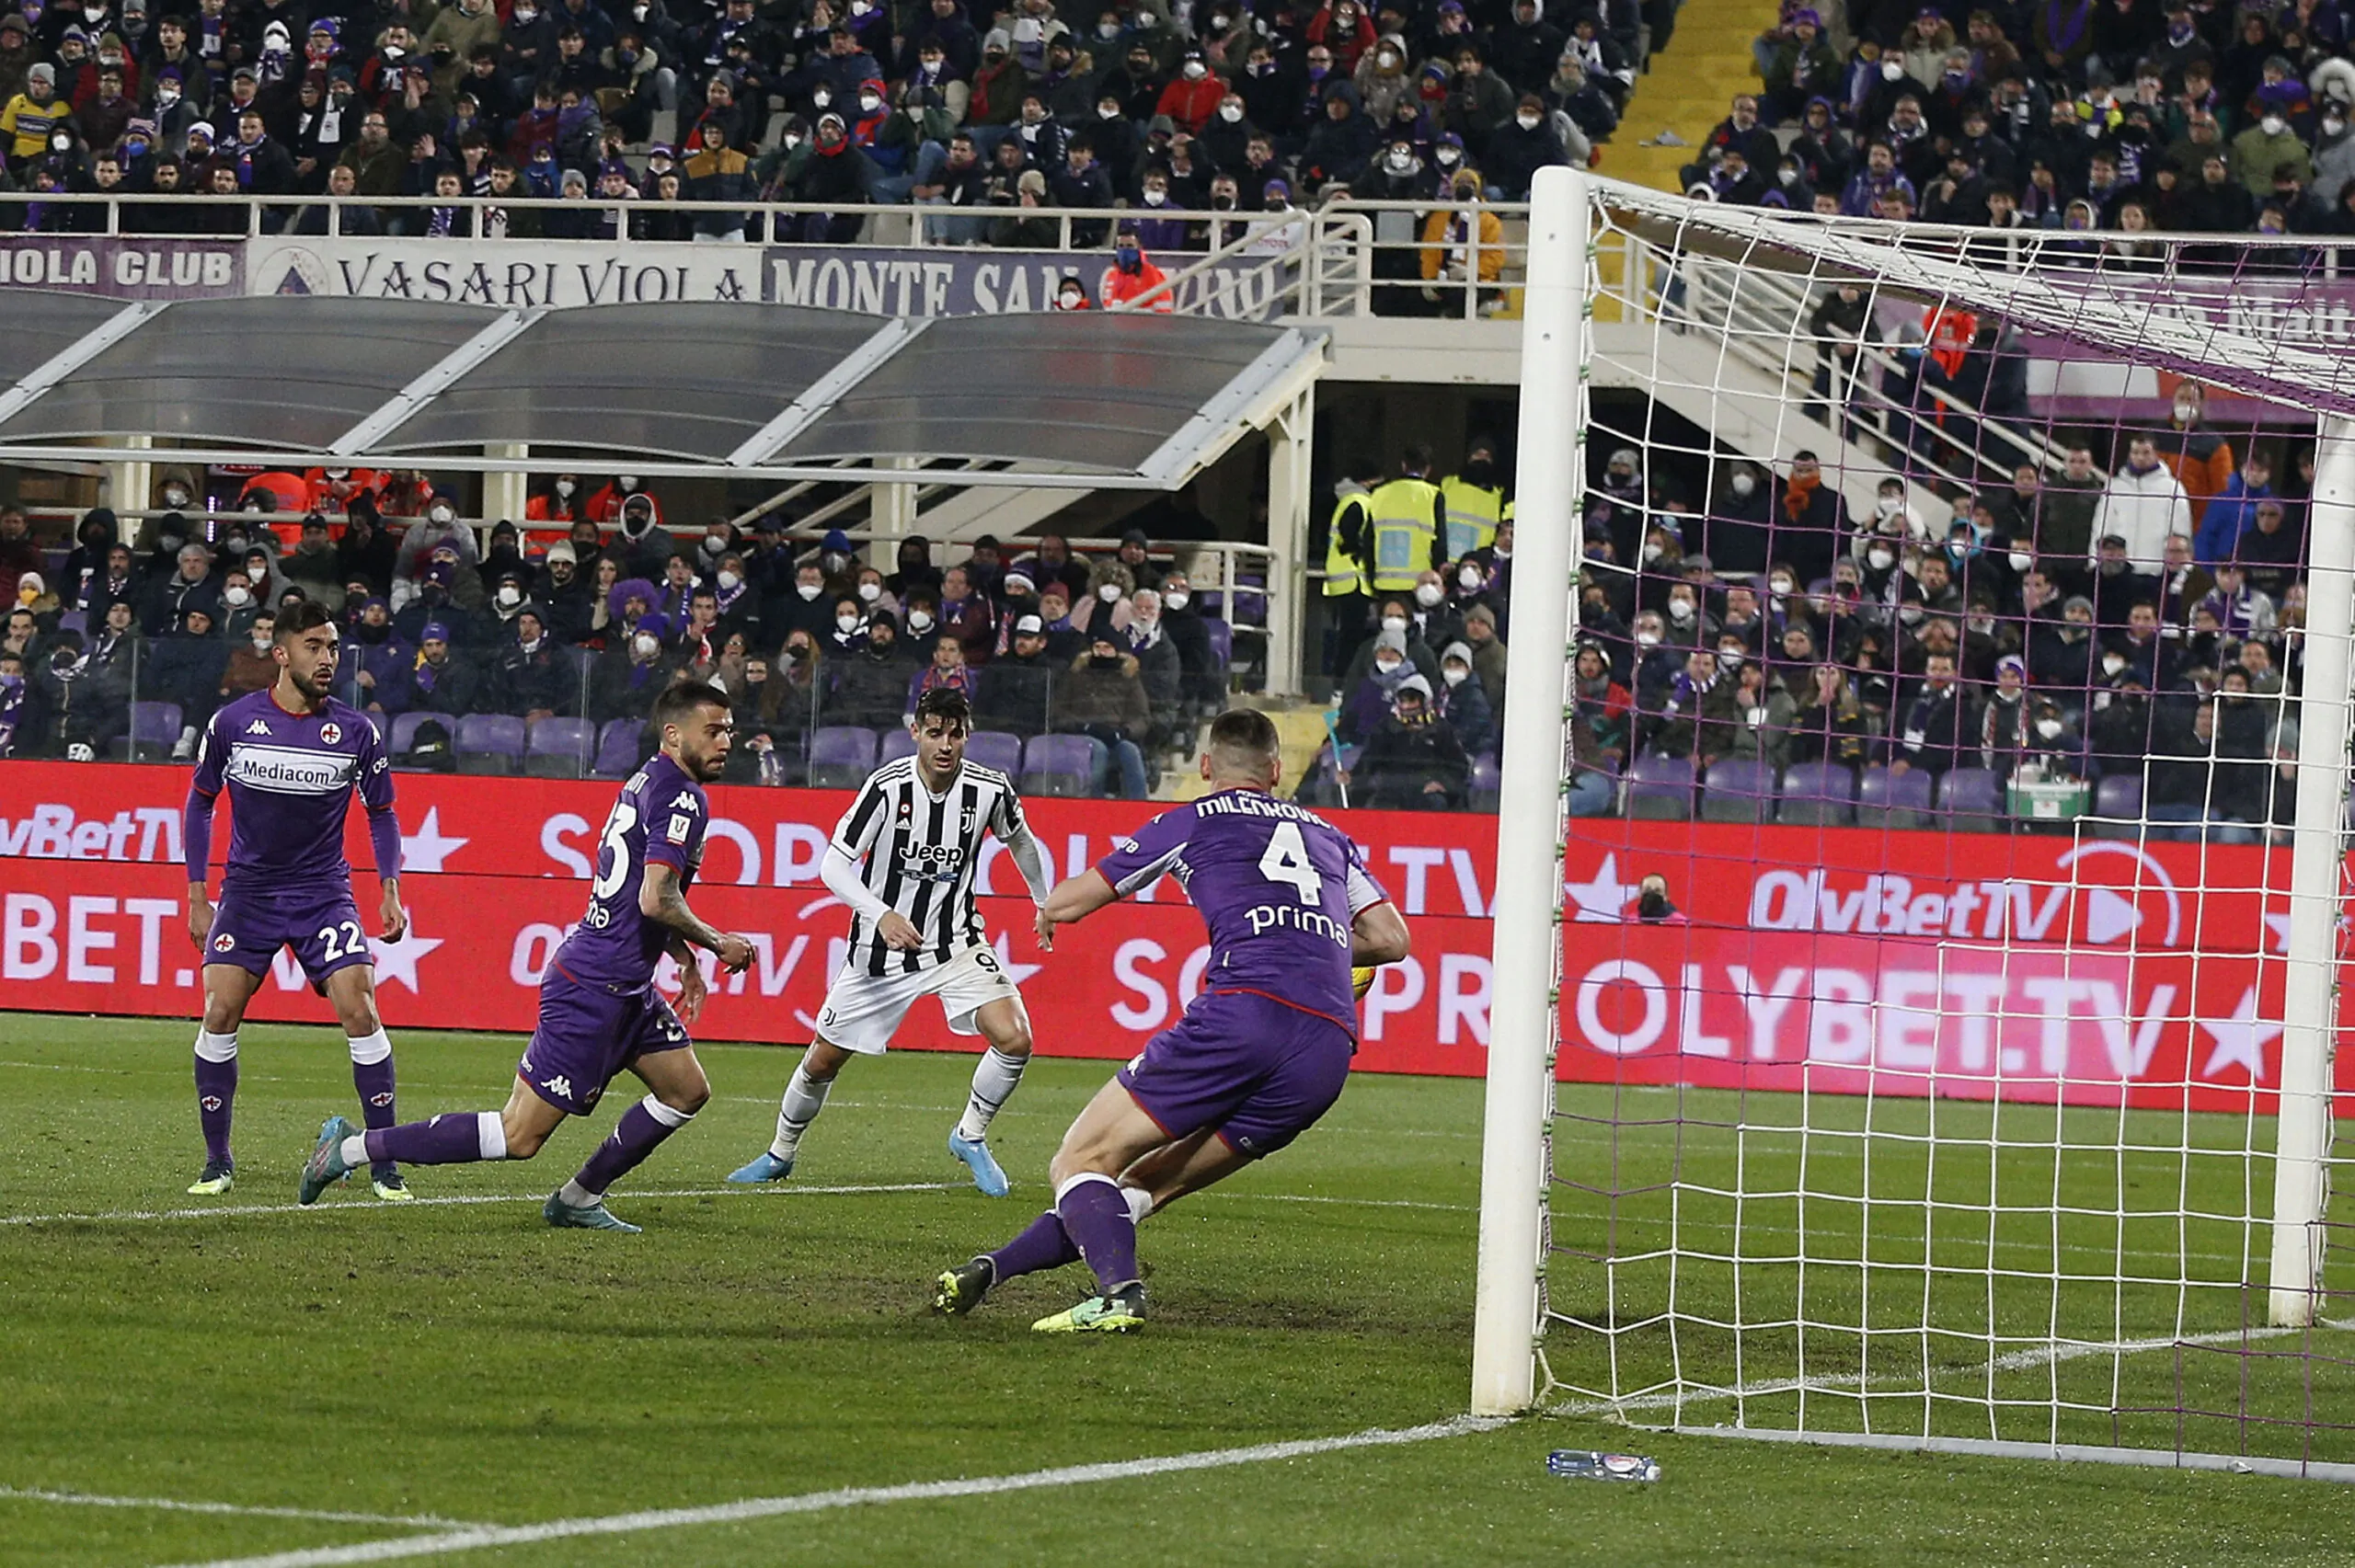 L’ex calciatore sorprende tutti: “La Fiorentina batterà la Juventus!”